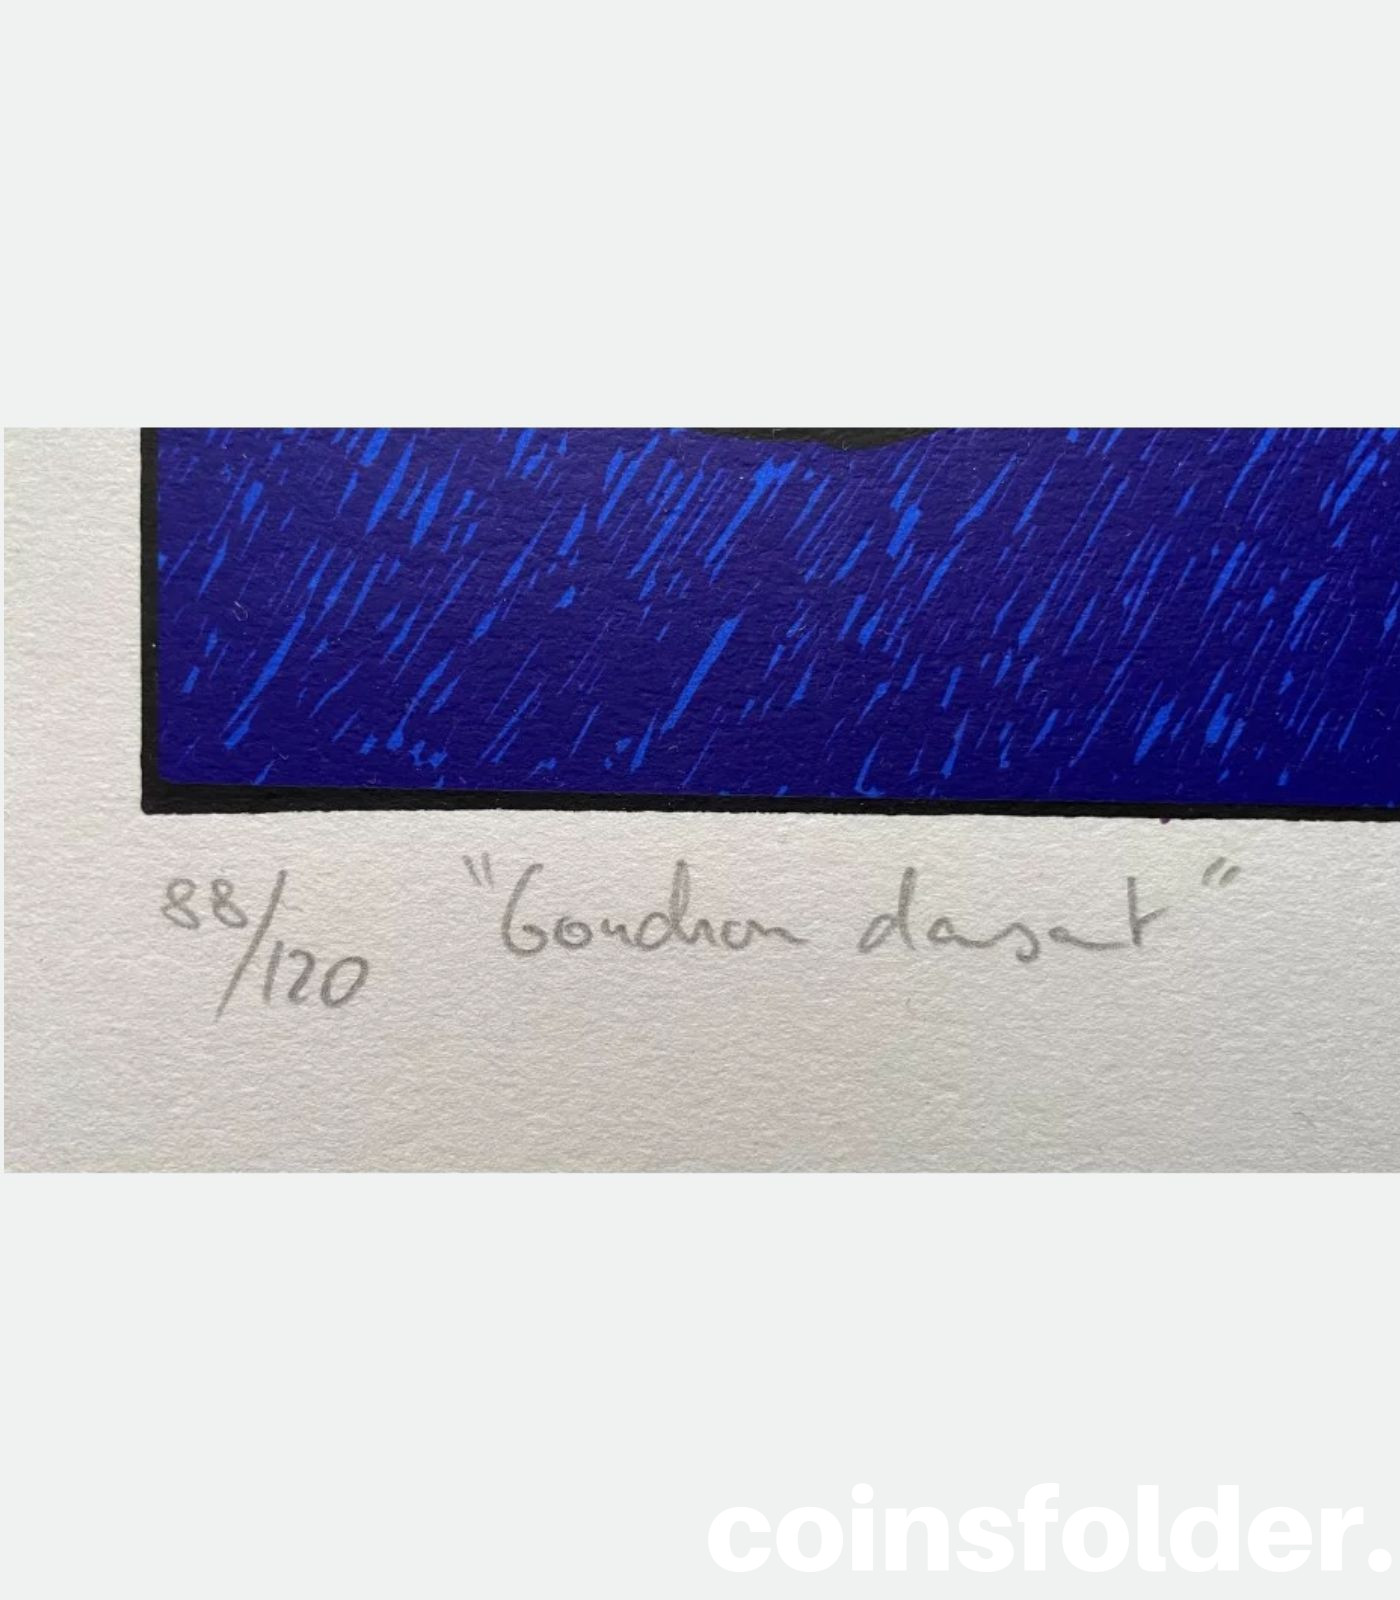 Frédéric Iriarte "Goudron Danssant" Lithography 1992 Signed